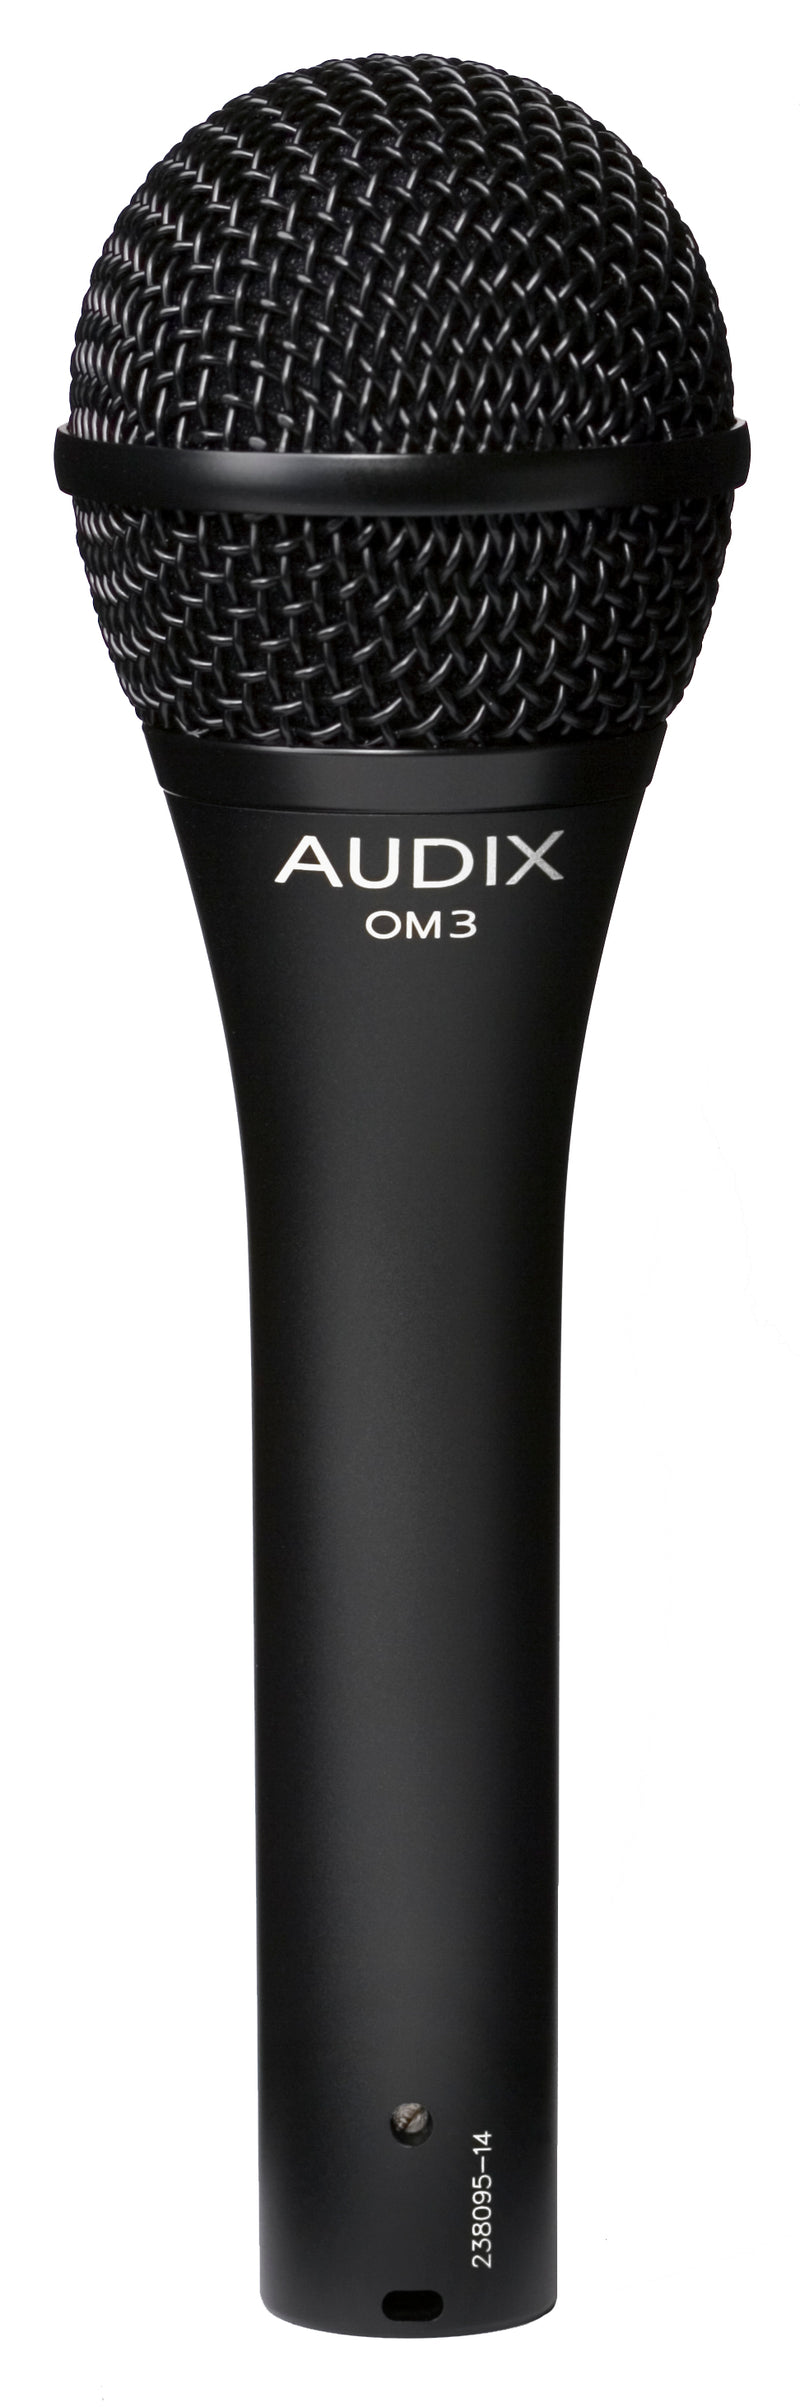 🇺🇸 Audix OM3 Dynamic Multi-Purpose Vocal & Instrument Microphone